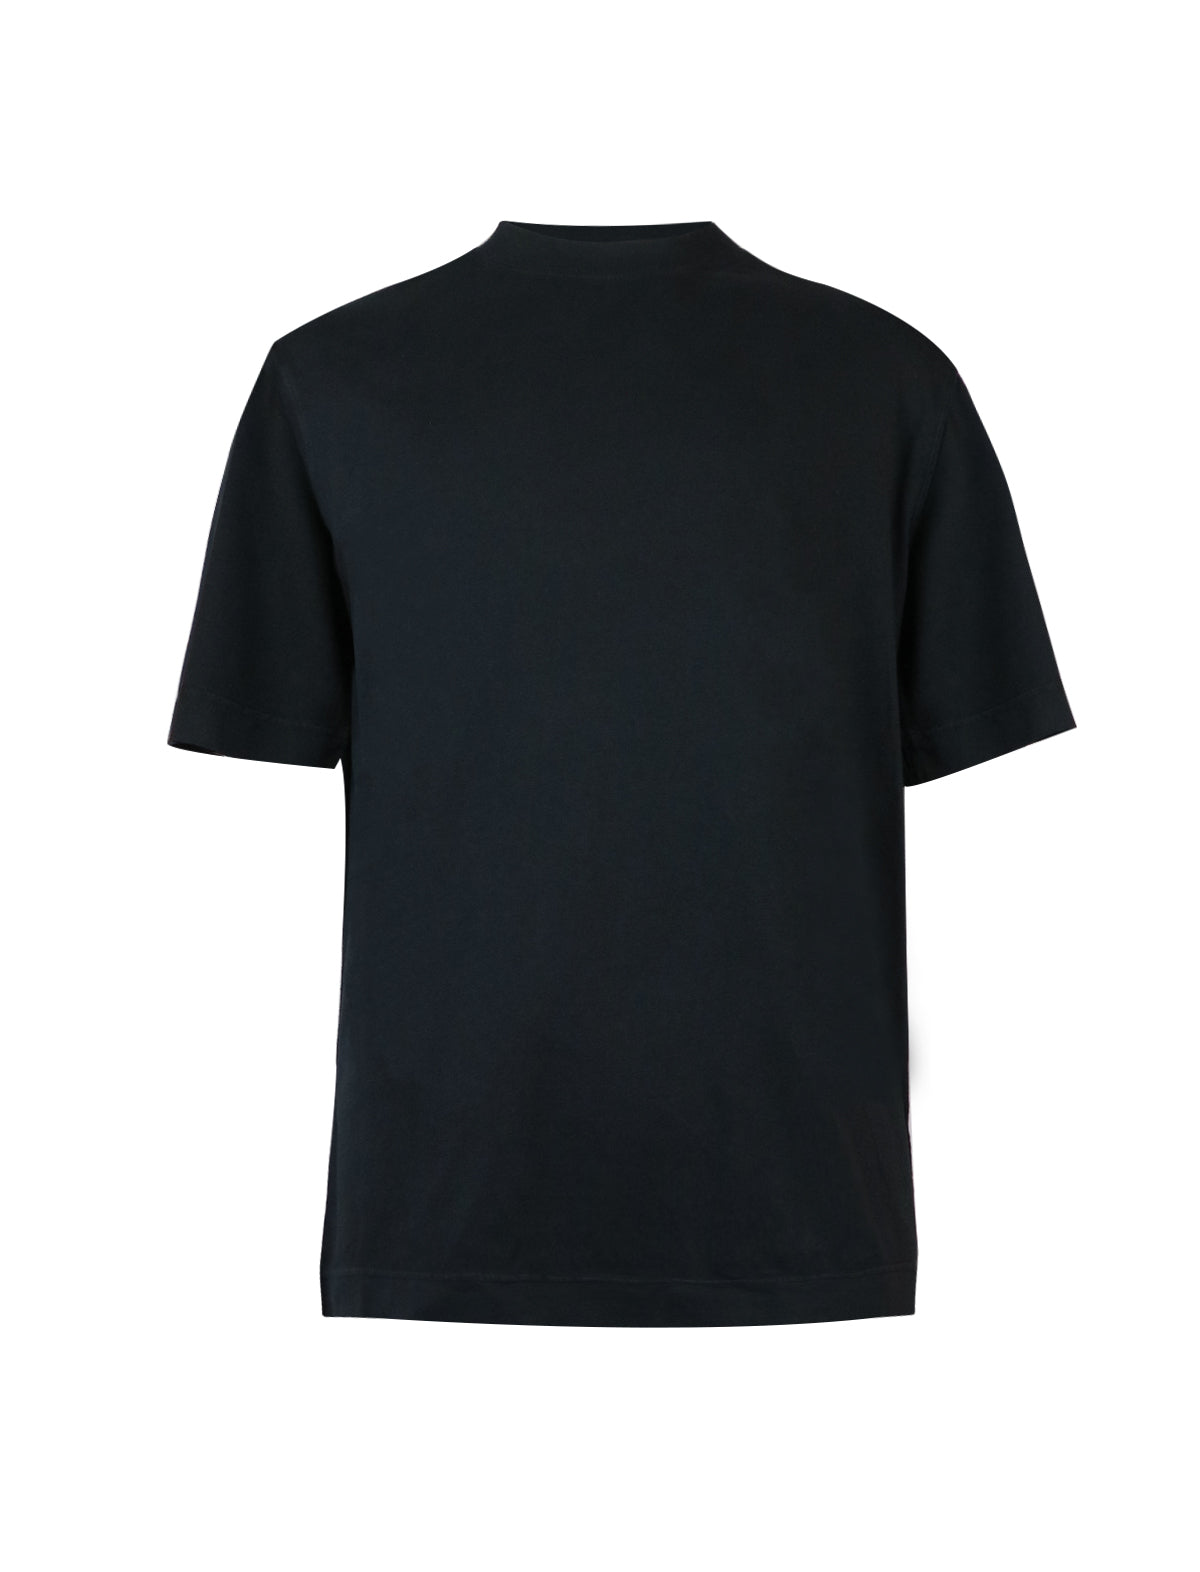 CIRCOLO 1901 Cotton Jersey T-Shirt in Black